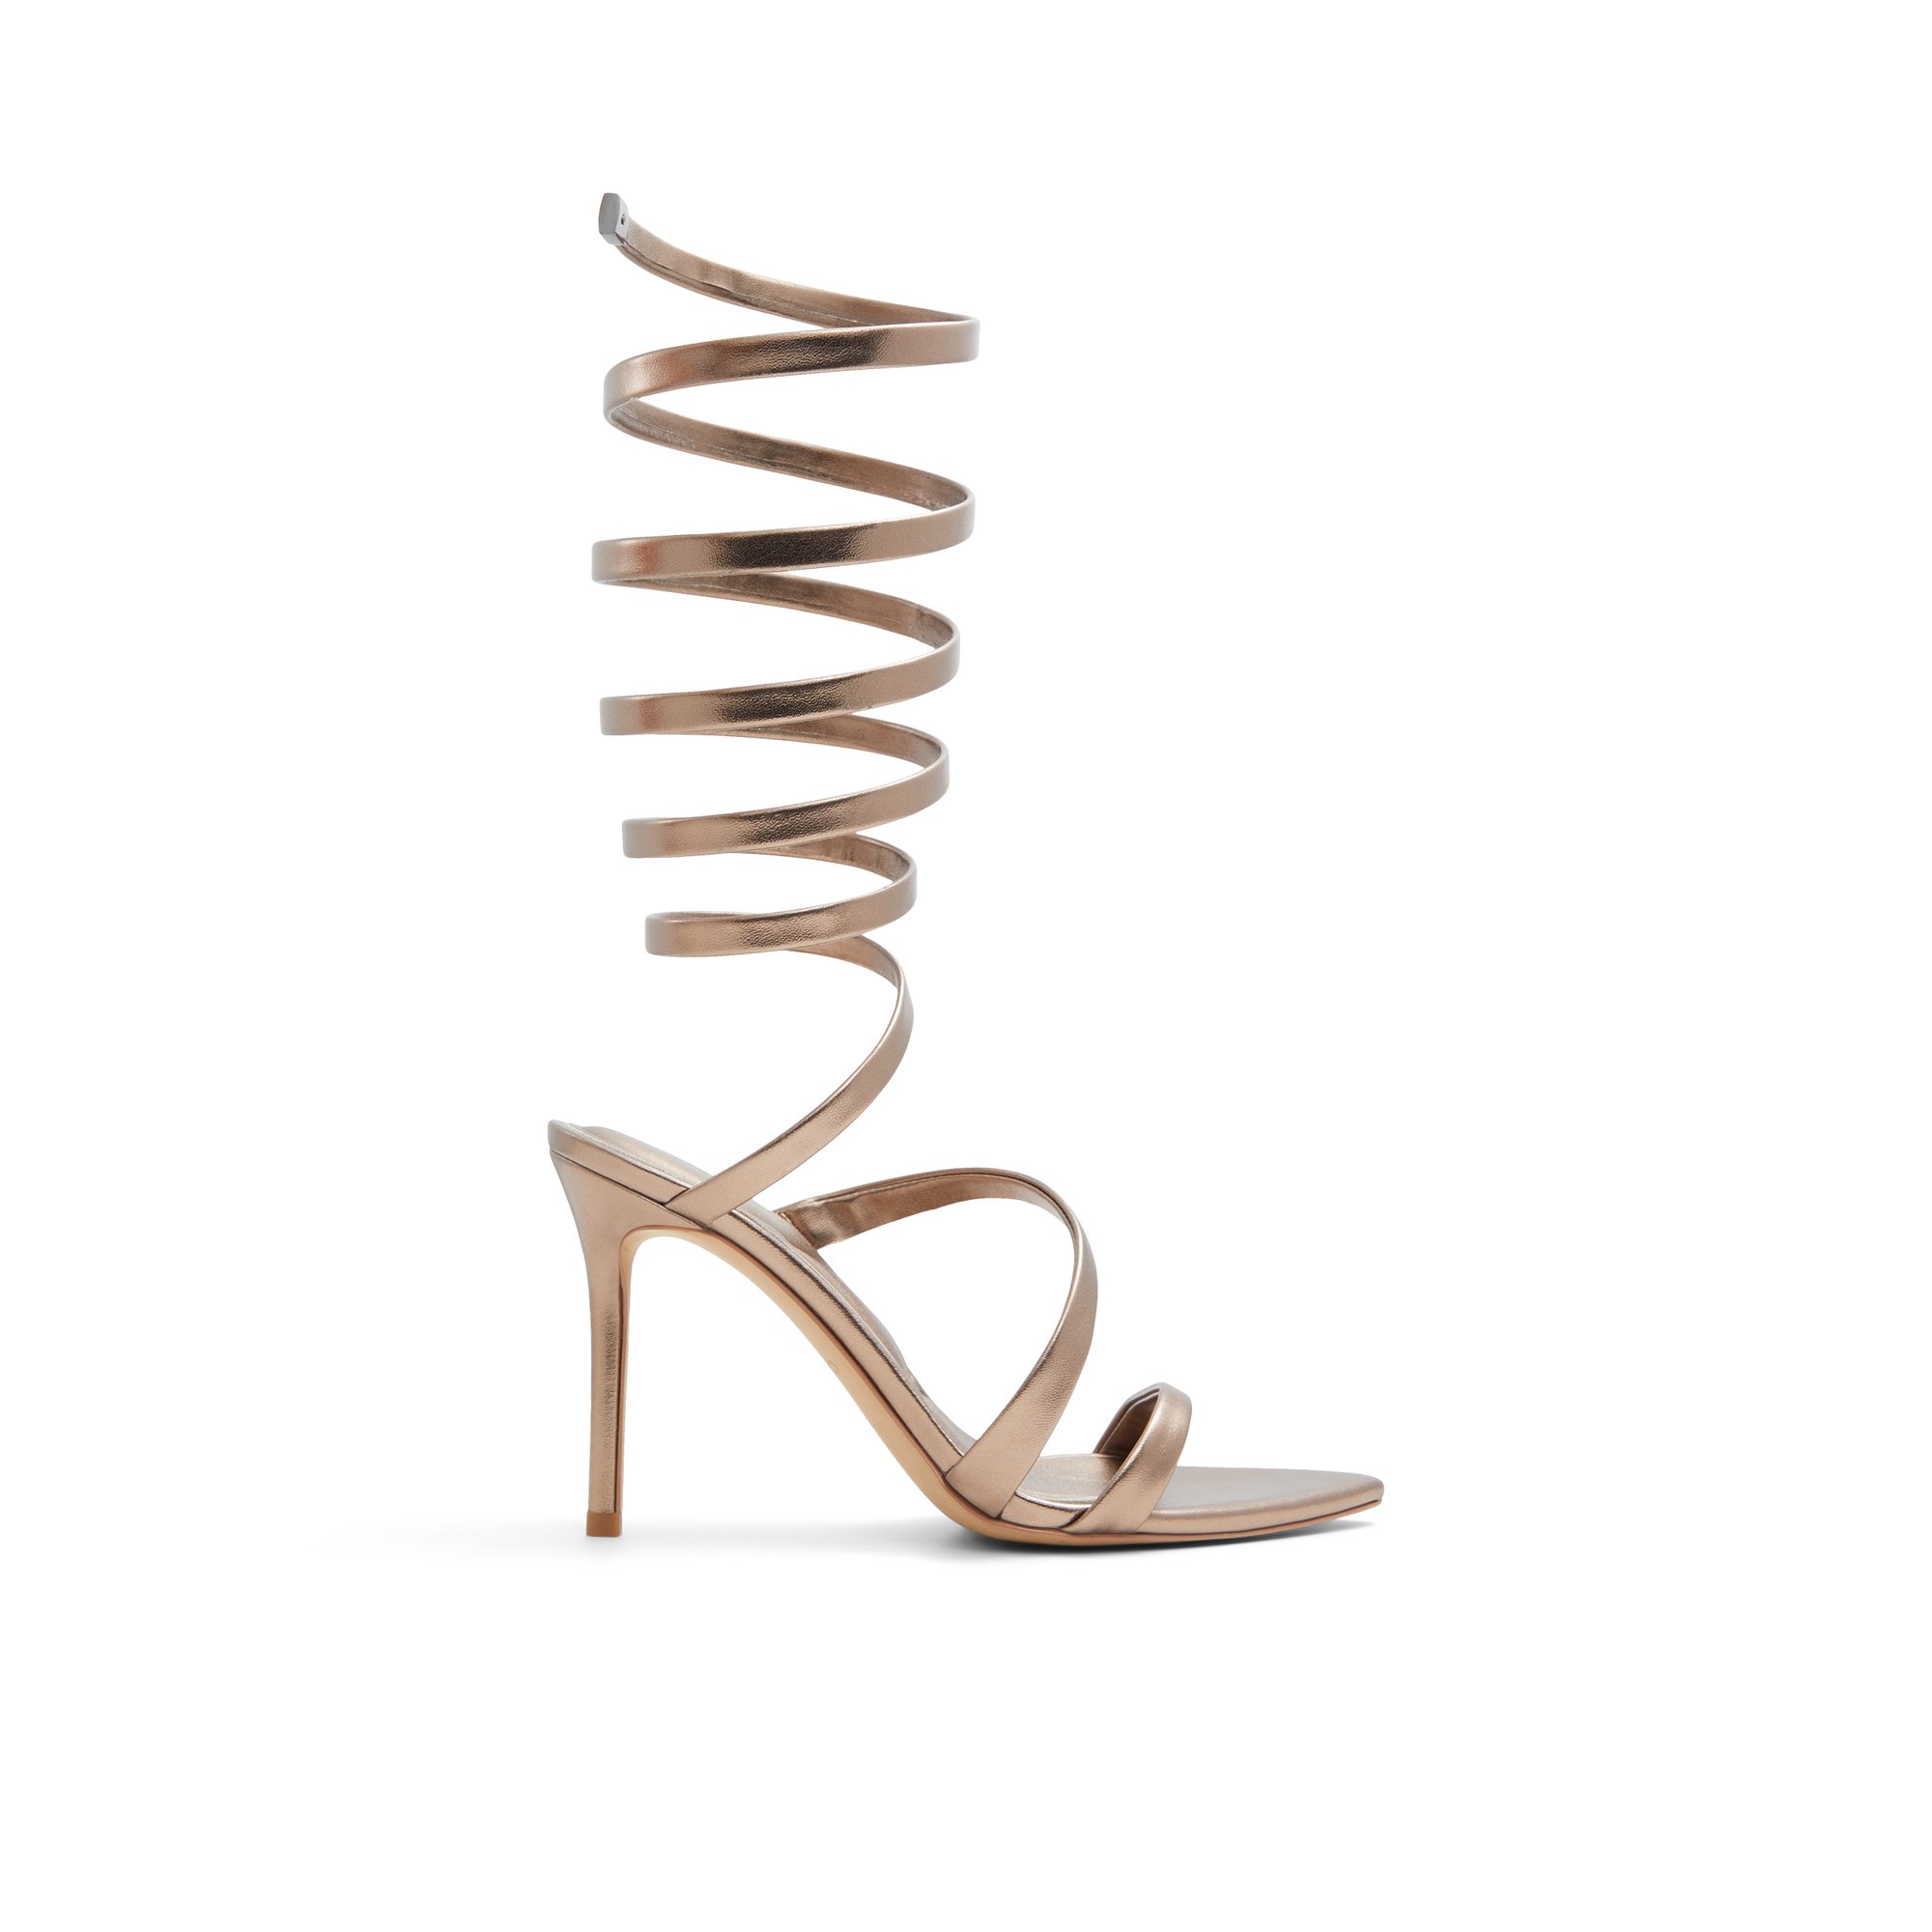 ALDO Spira - Women's Strappy Sandal Sandals - Brown